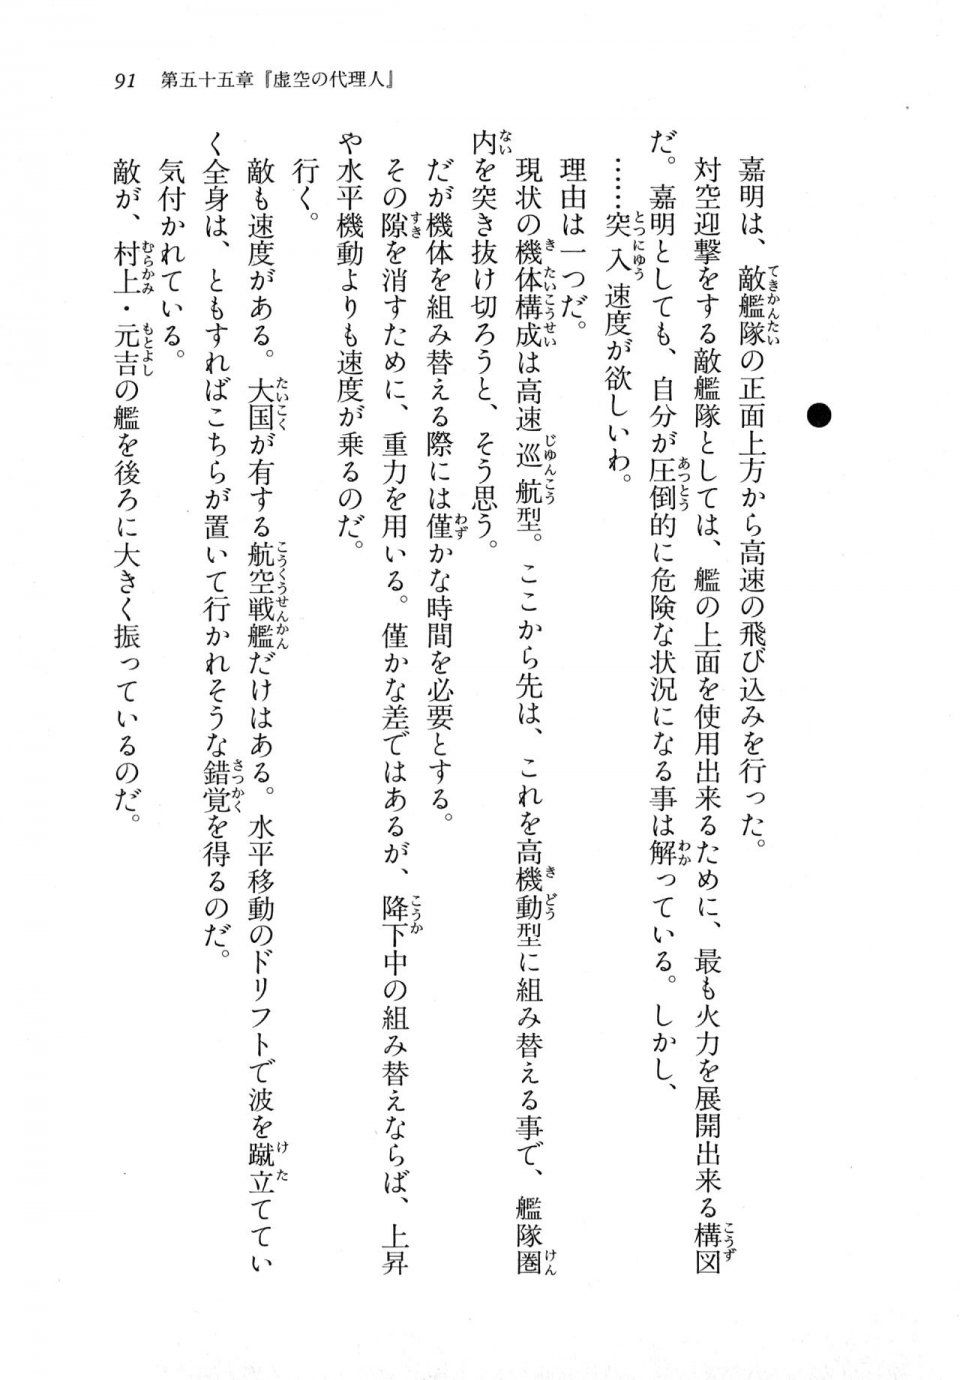 Kyoukai Senjou no Horizon LN Vol 18(7C) Part 1 - Photo #91